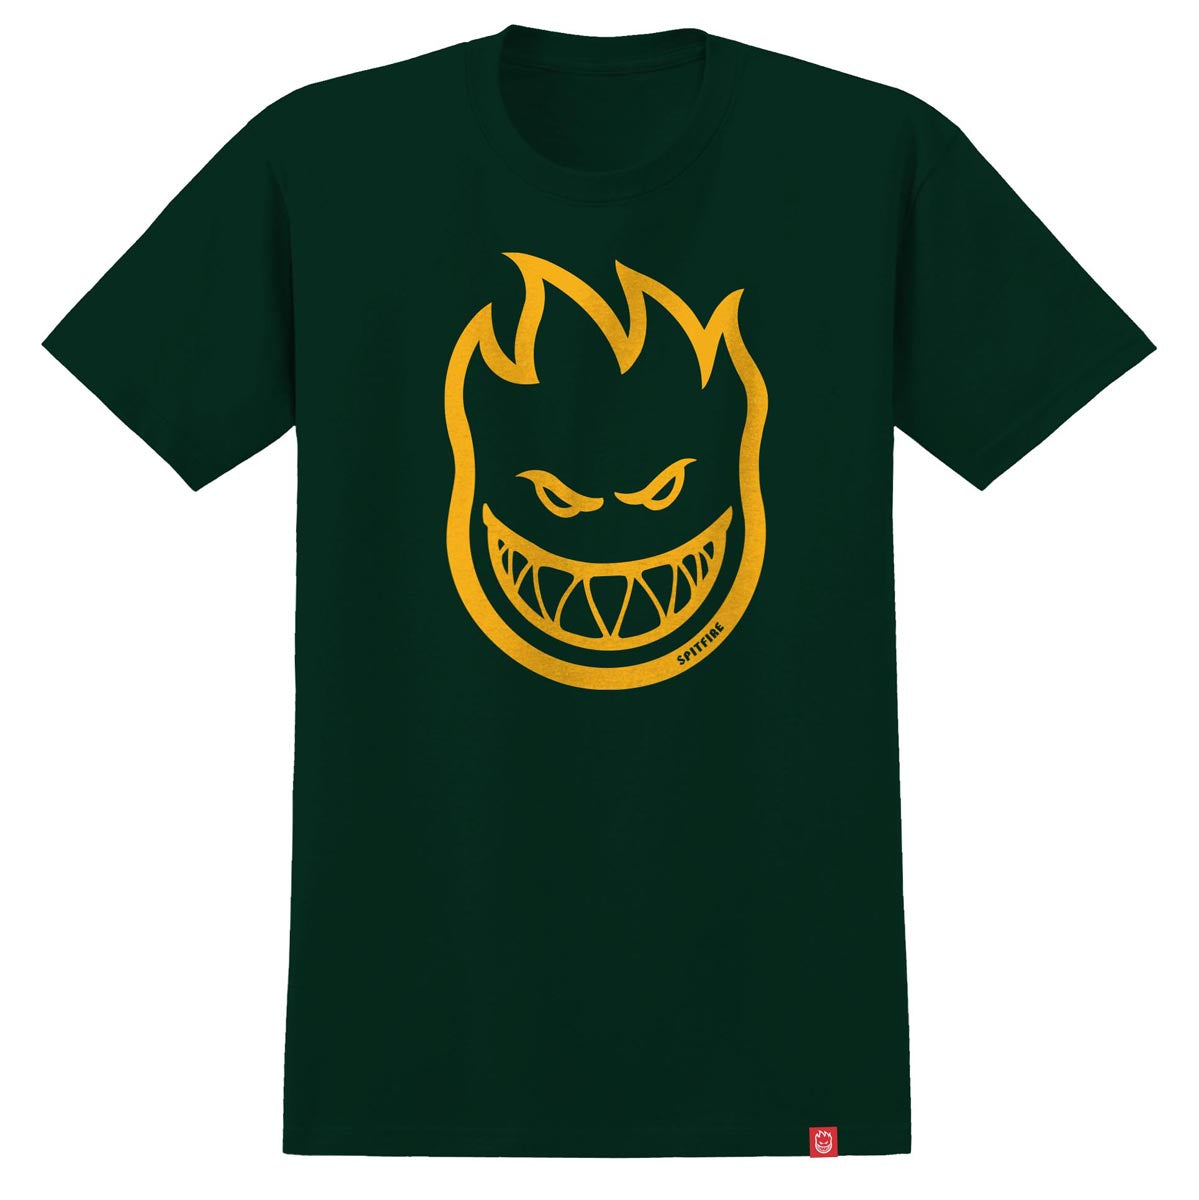 Spitfire Bighead T-Shirt - Forest Green/Gold image 1